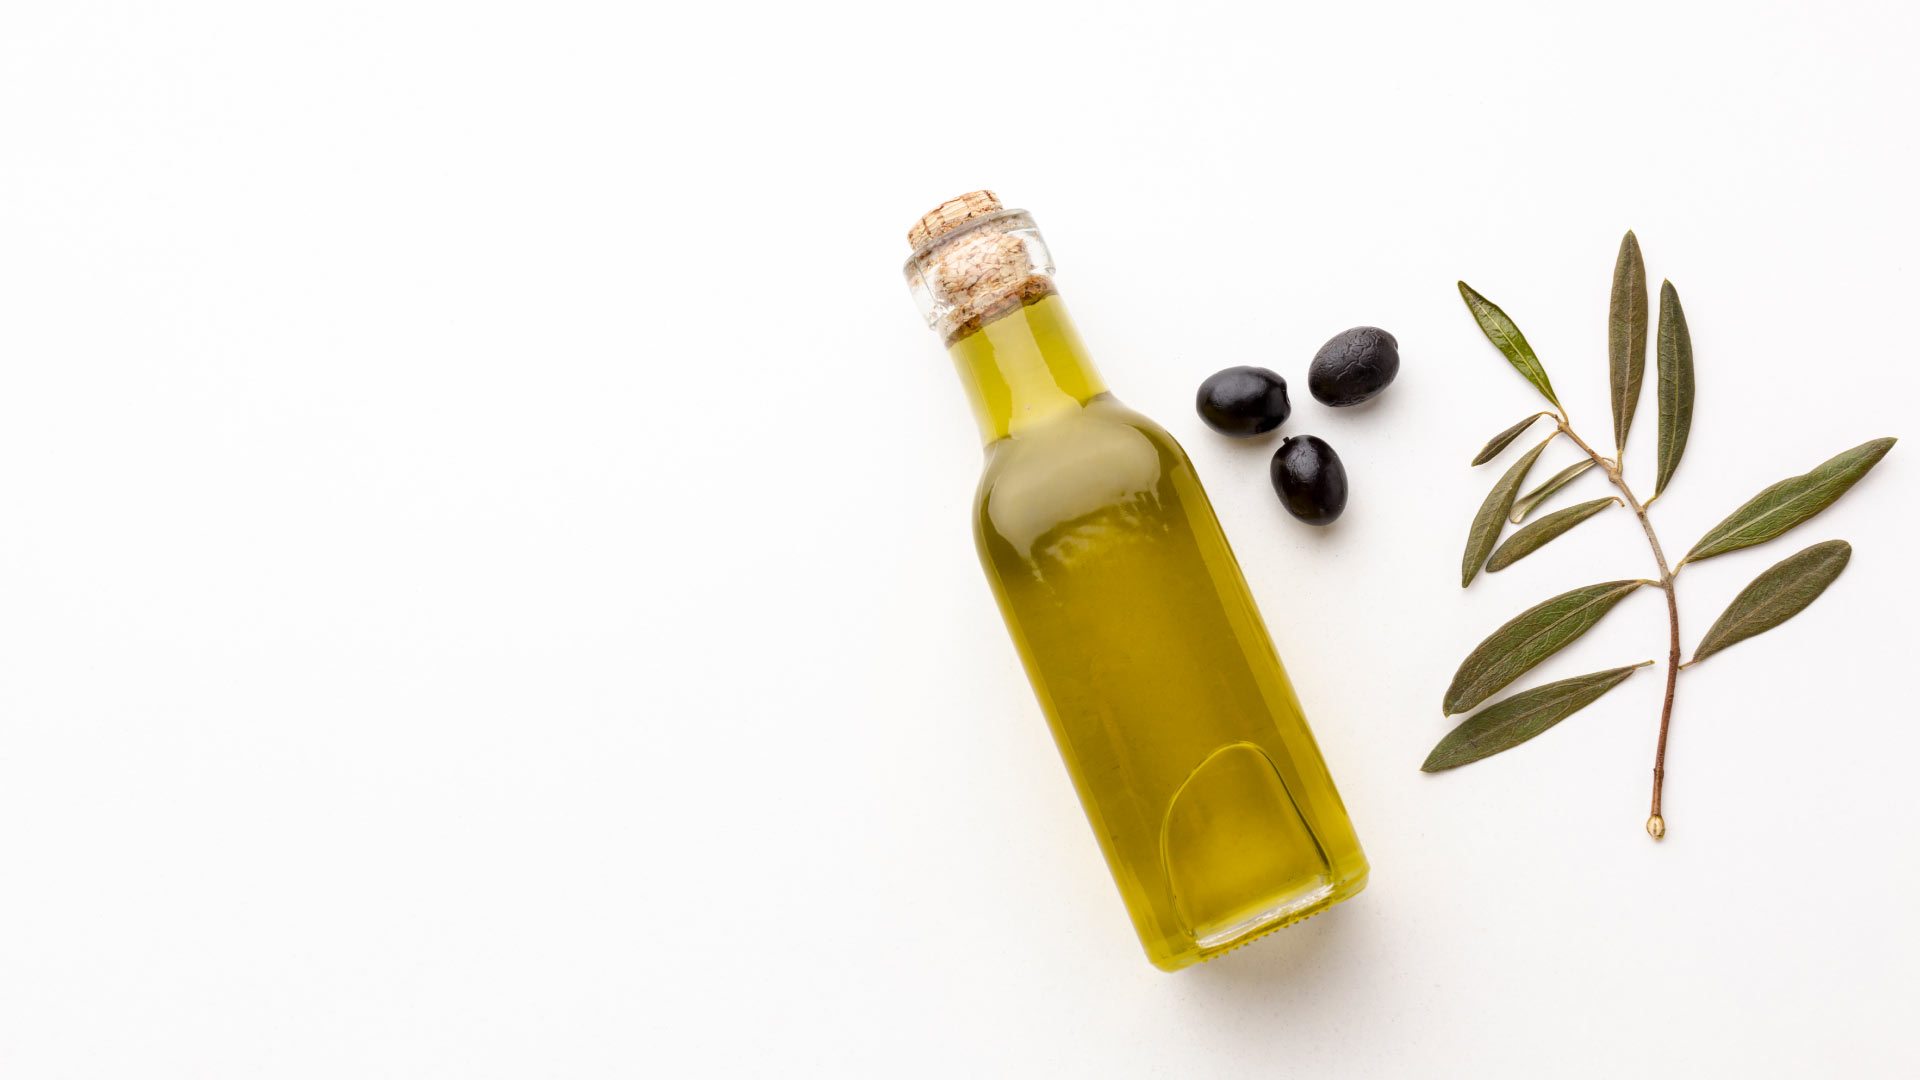 aceite de oliva virgen extra o aove